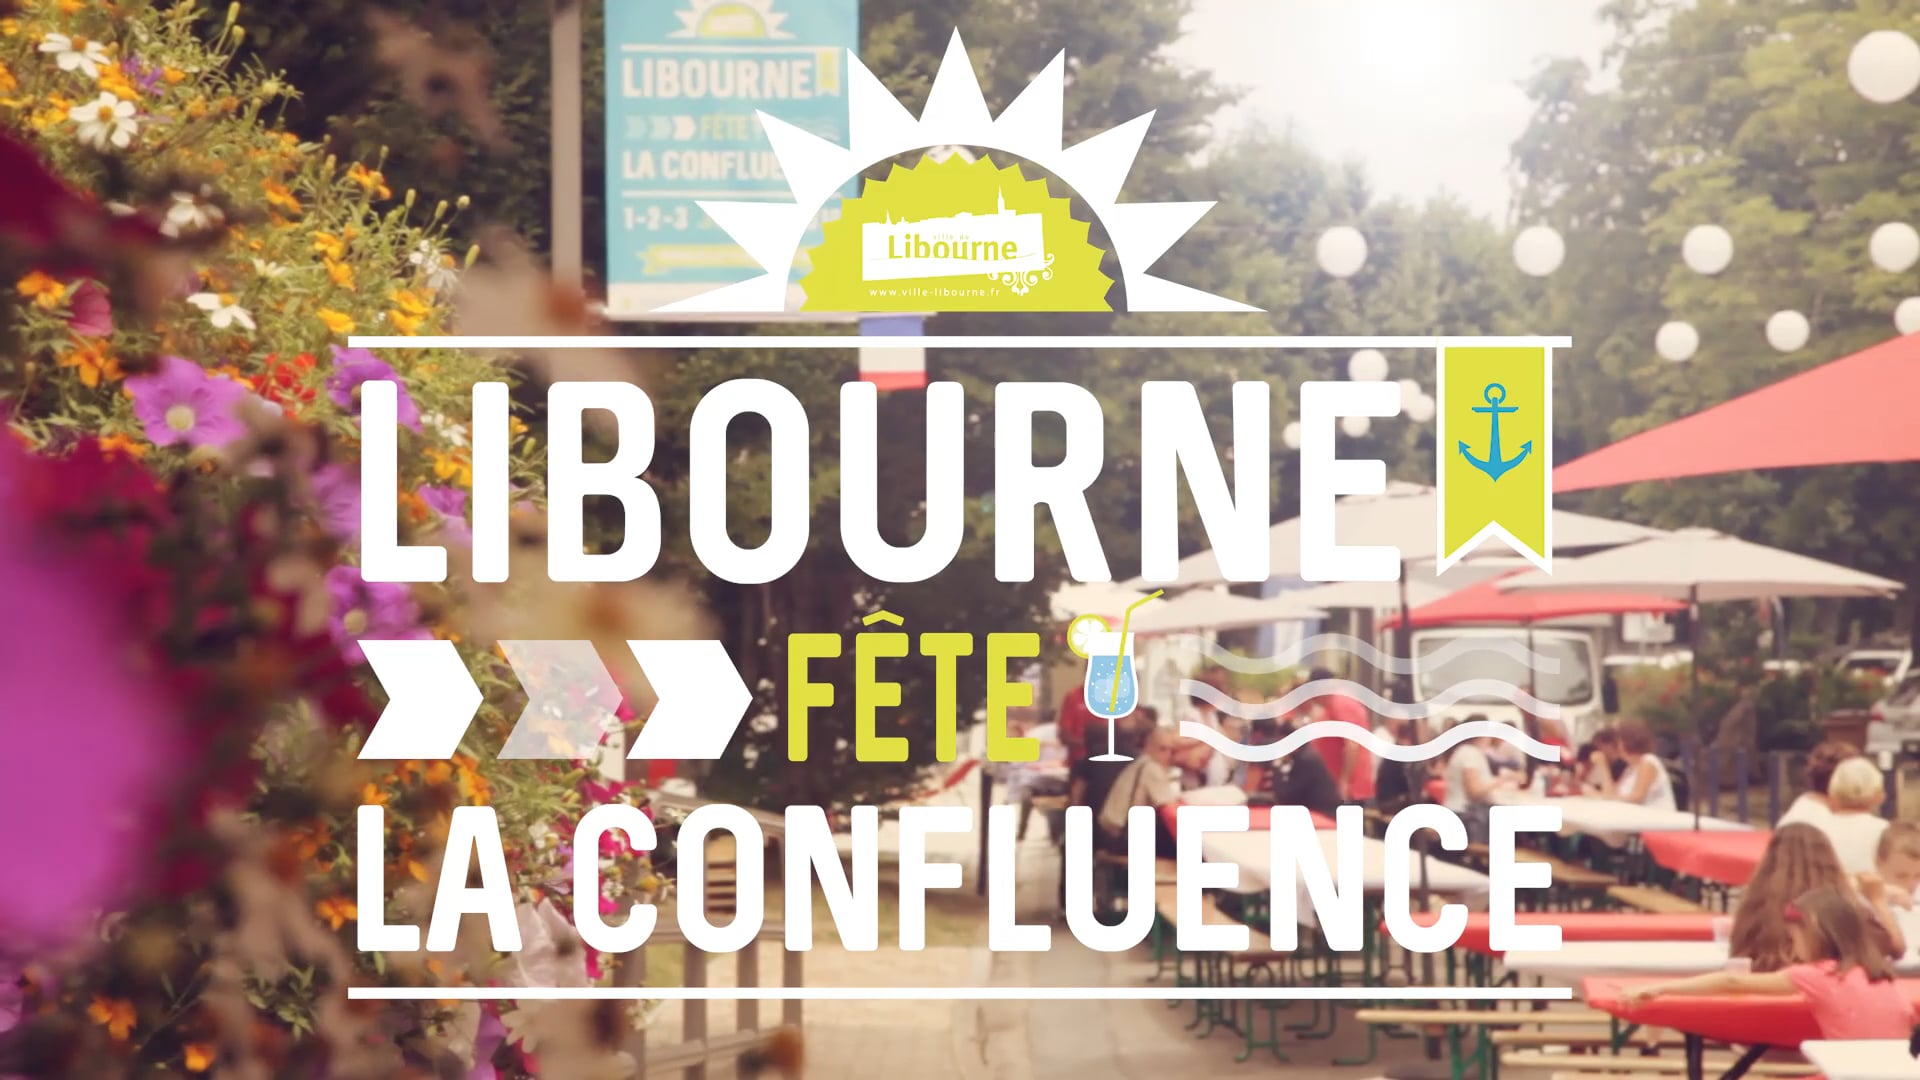 Libourne fête la confluence on Vimeo